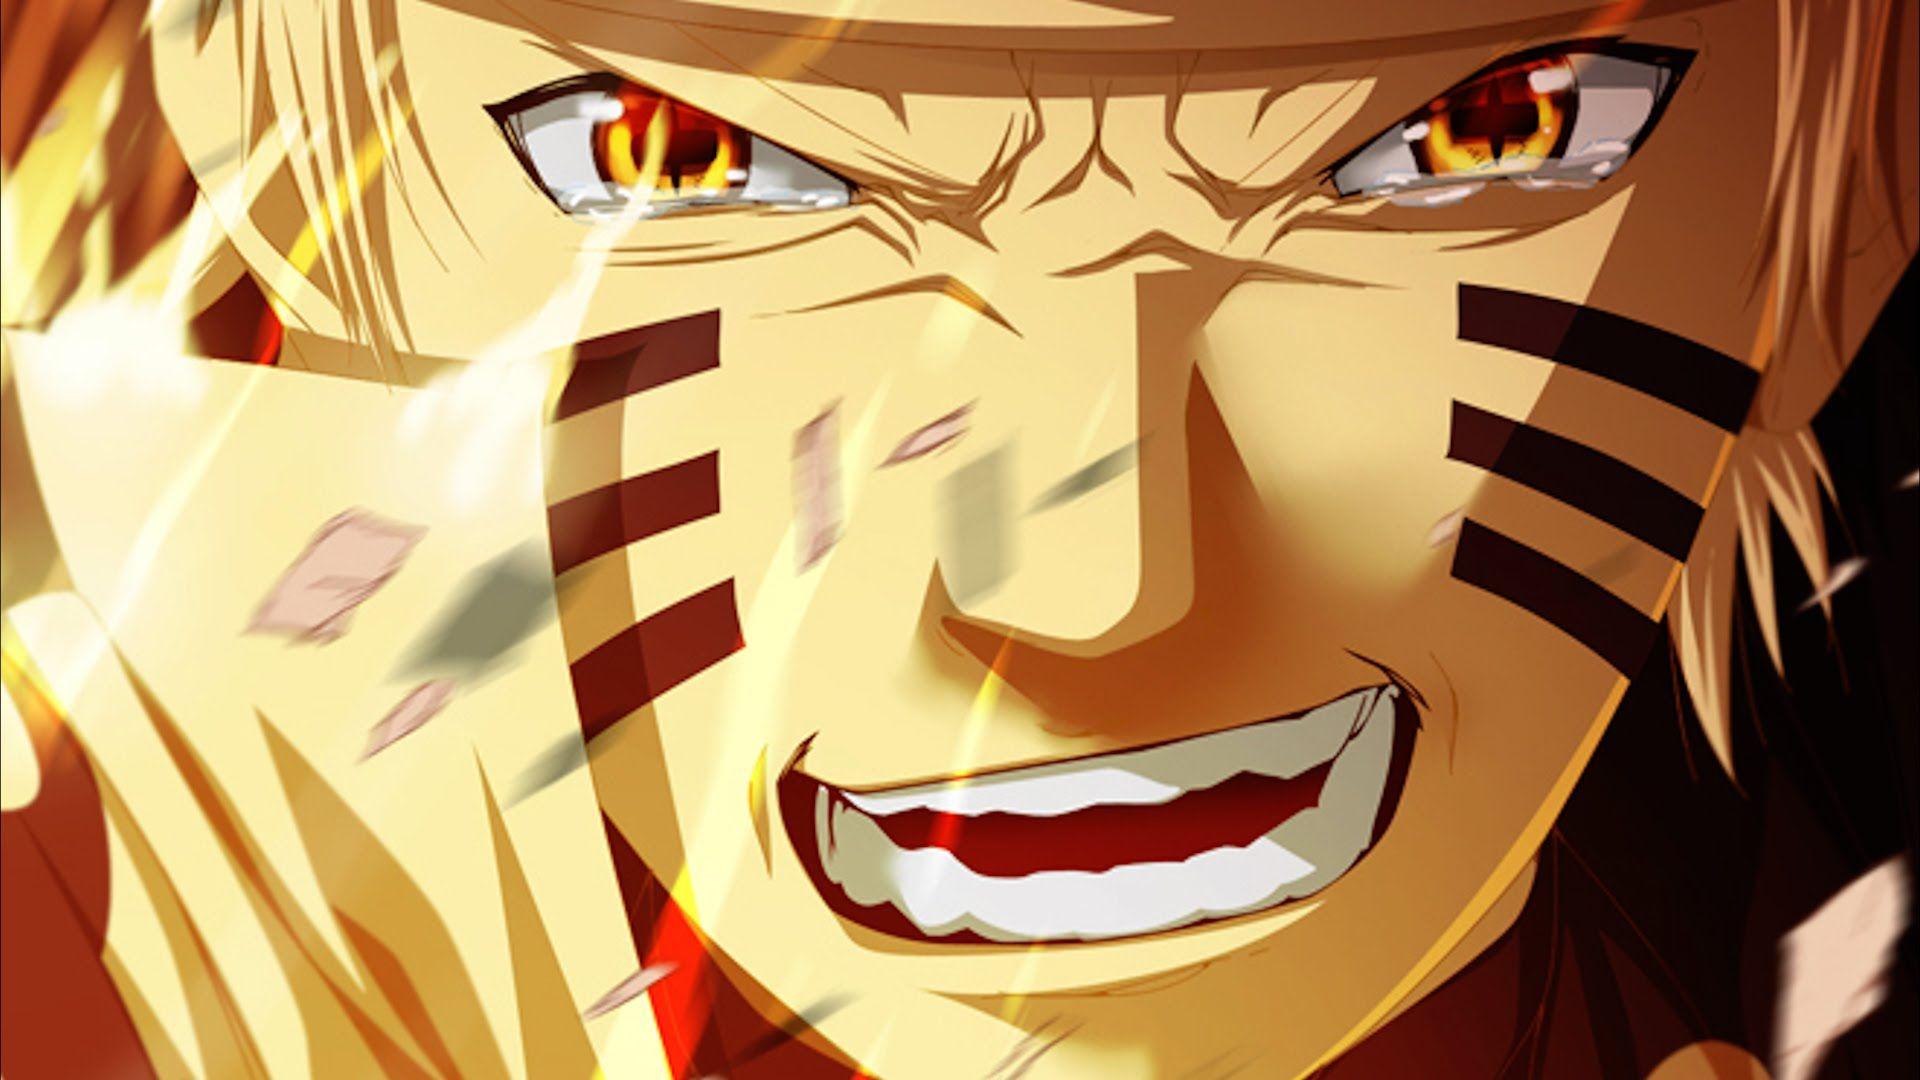 Naruto Smile Wallpapers Top Free Naruto Smile Backgrounds